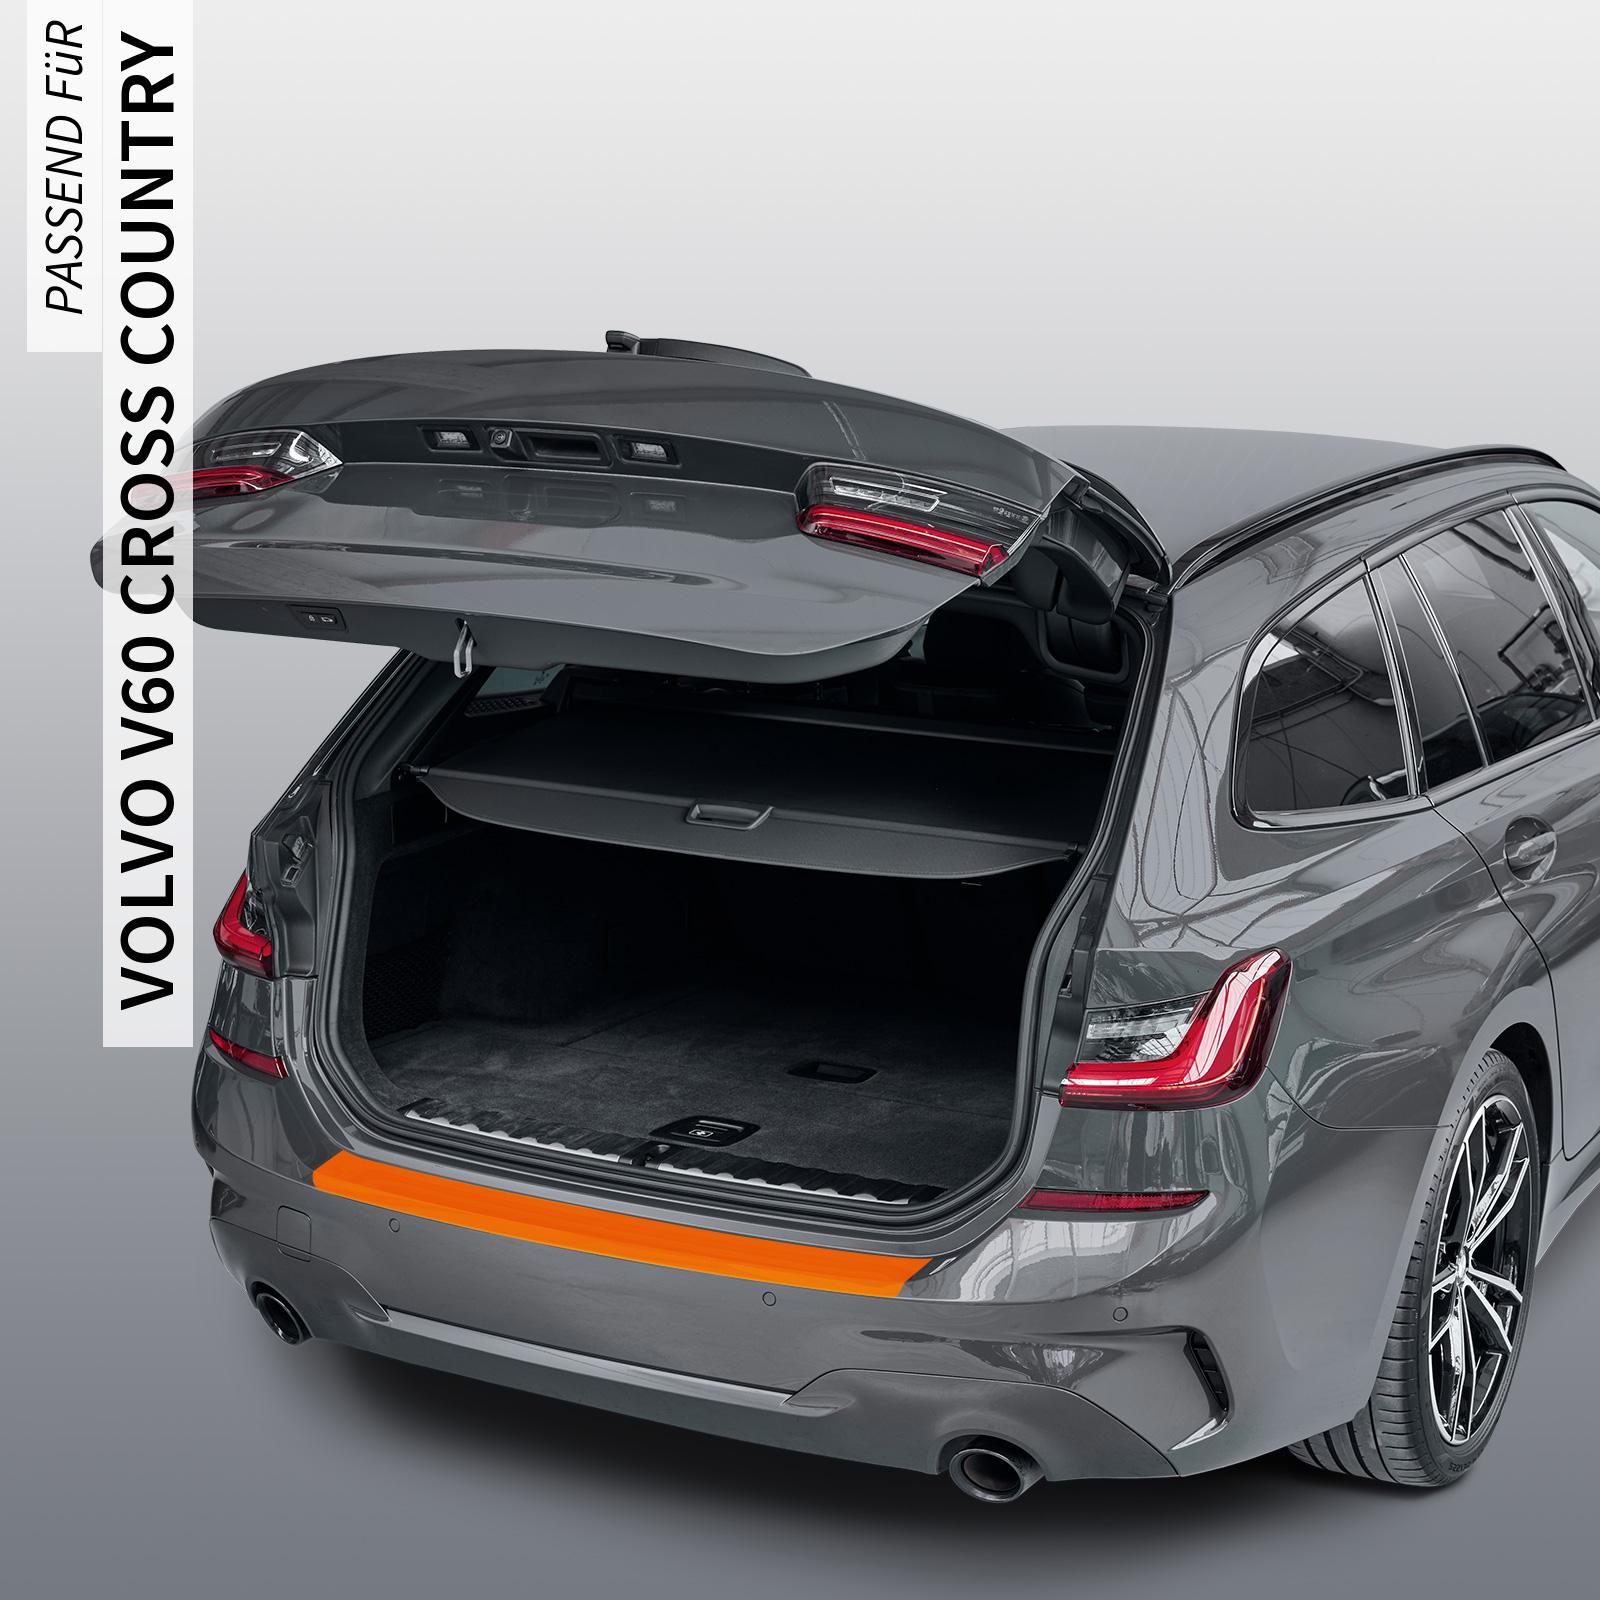 Ladekantenschutzfolie - Transparent Glatt Hochglänzend 150 µm stark für Volvo V60 Cross Country (I) Facelift, BJ 2013-2018